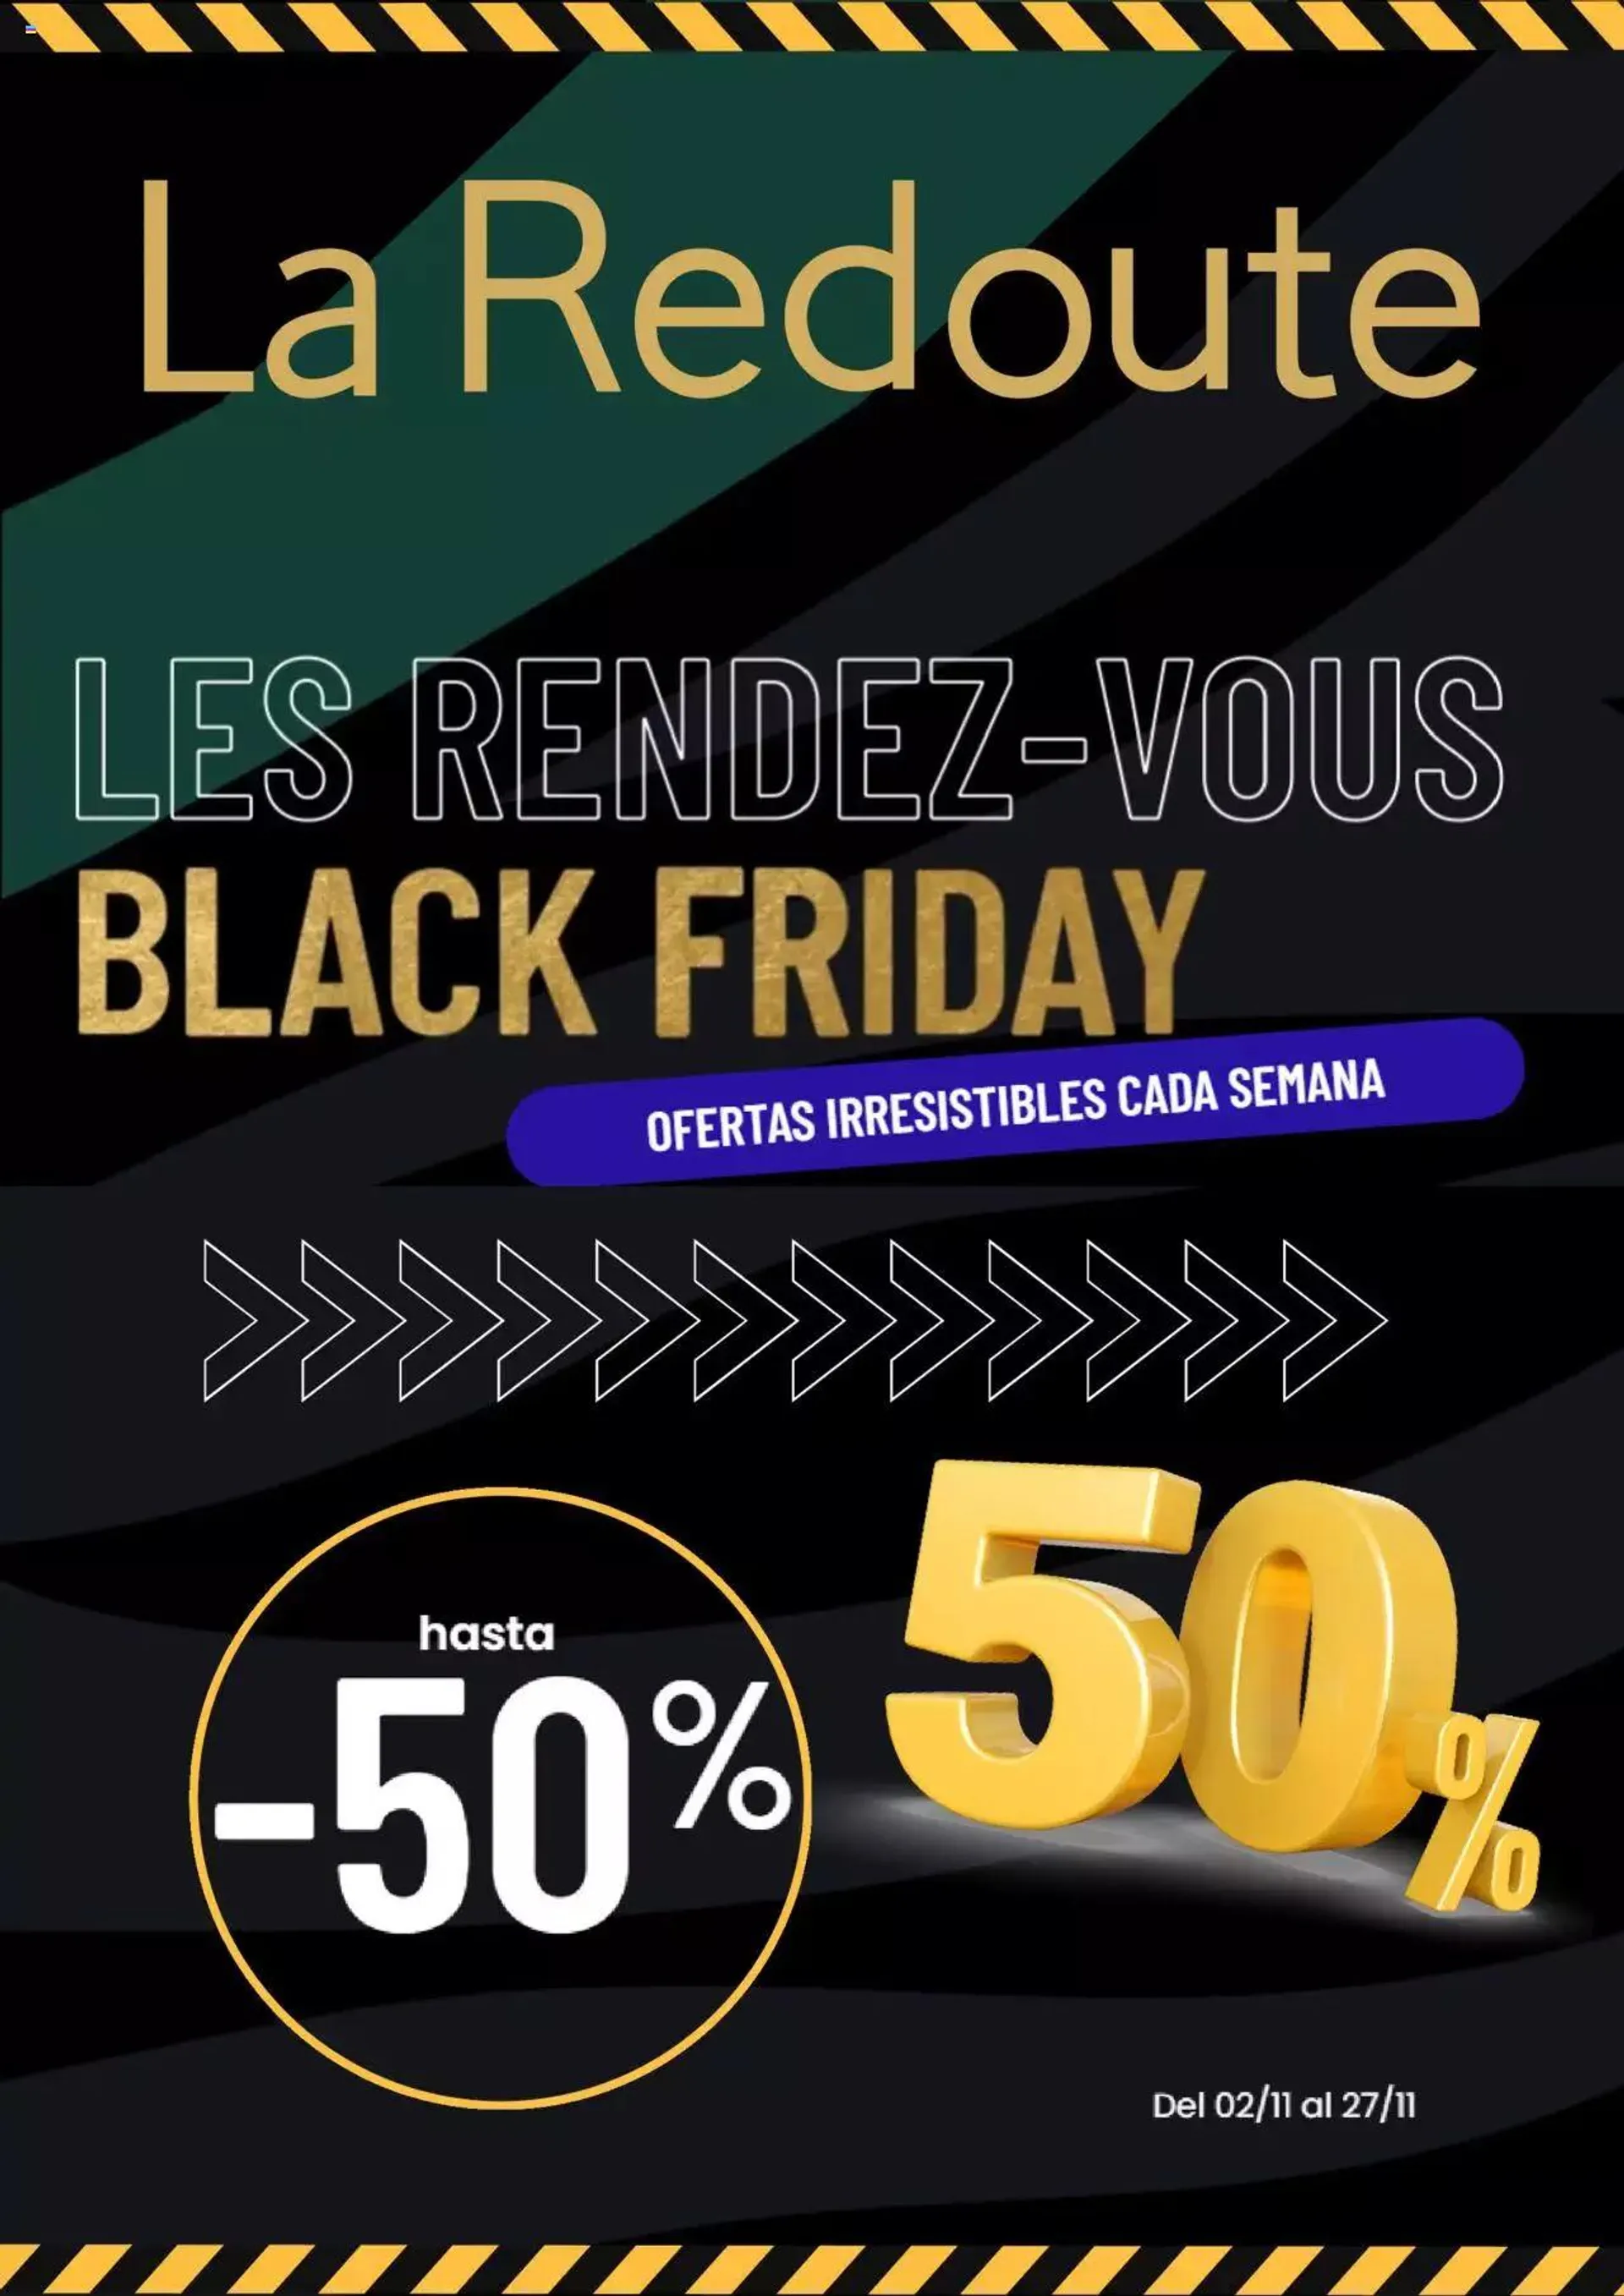 La Redoute Black Friday